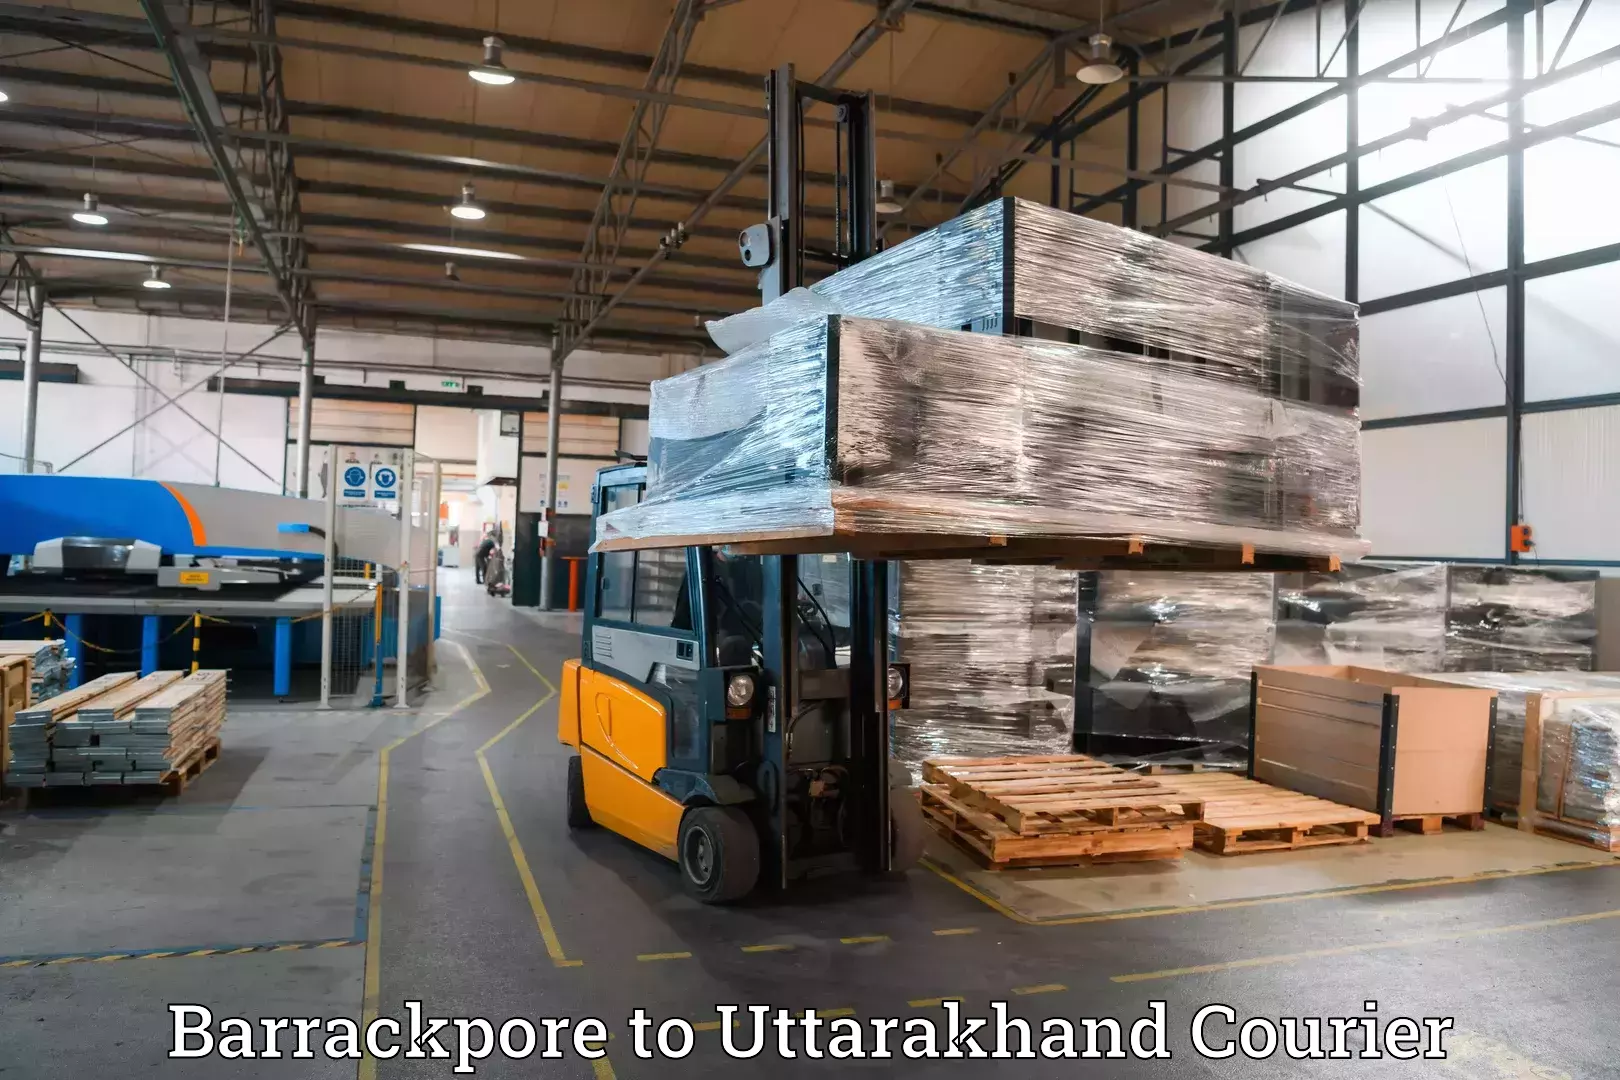 Luggage shipment specialists Barrackpore to Uttarakhand